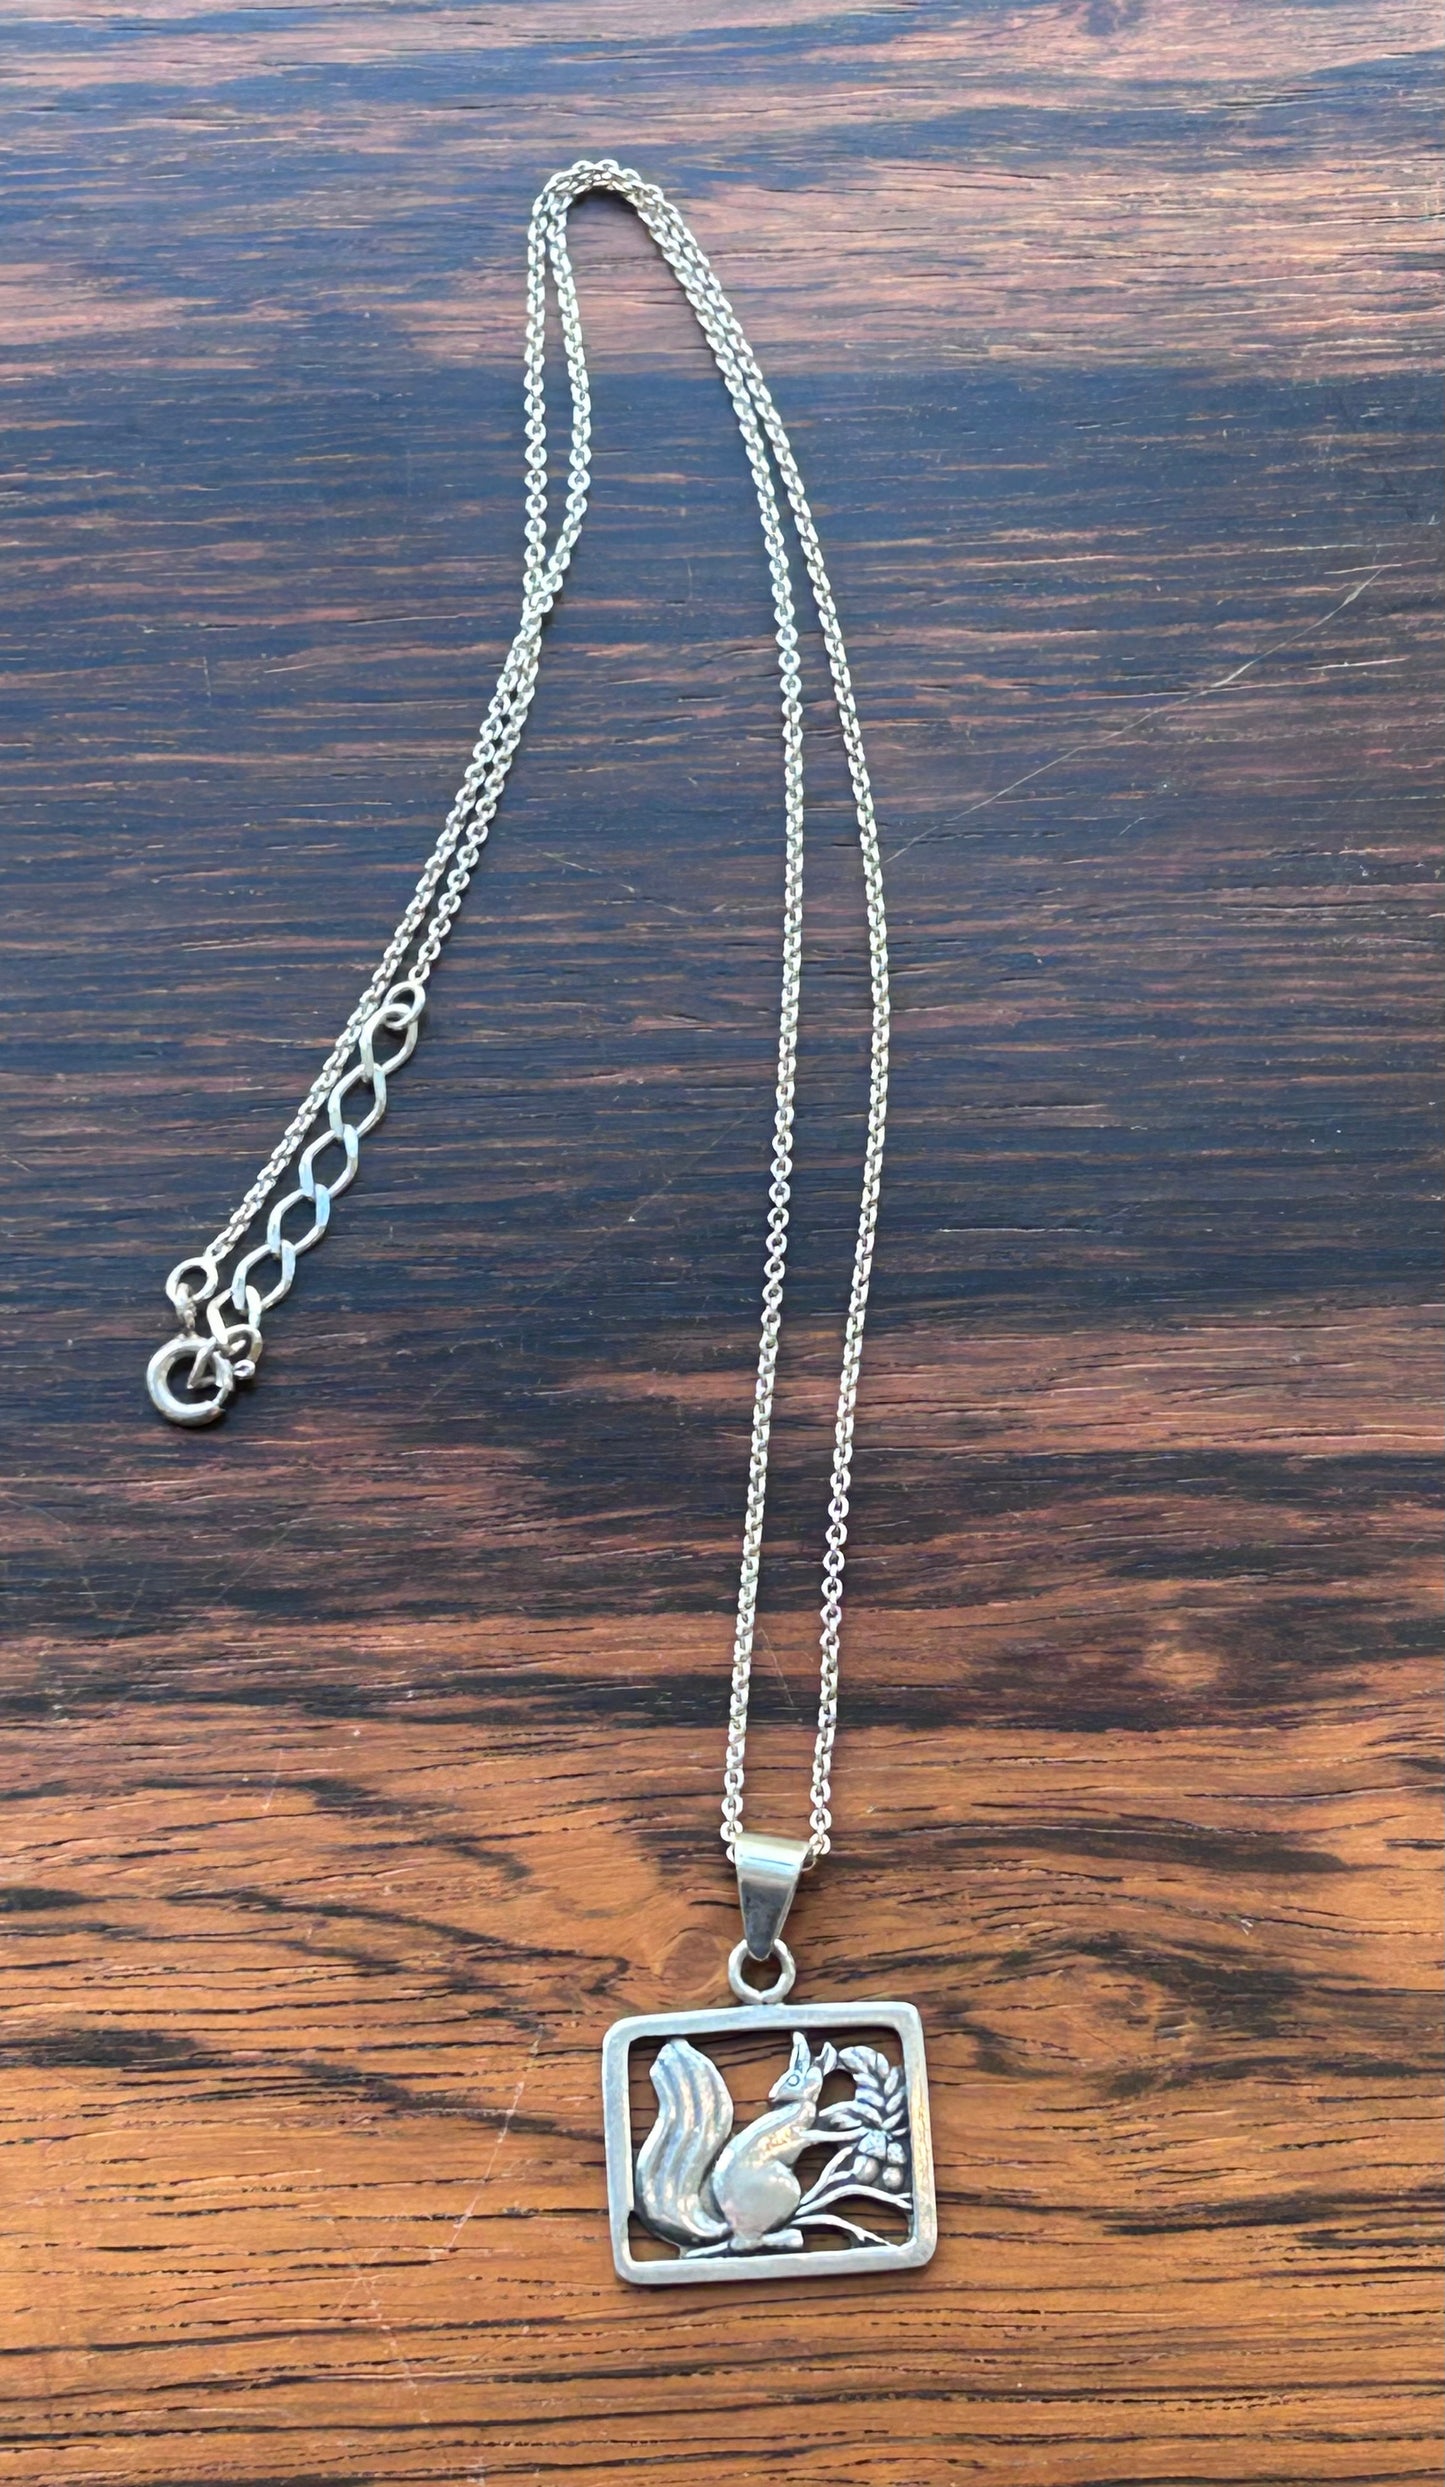 Silver pendant, C Brumberg Hansen, Denmark - Squirrel with acorn